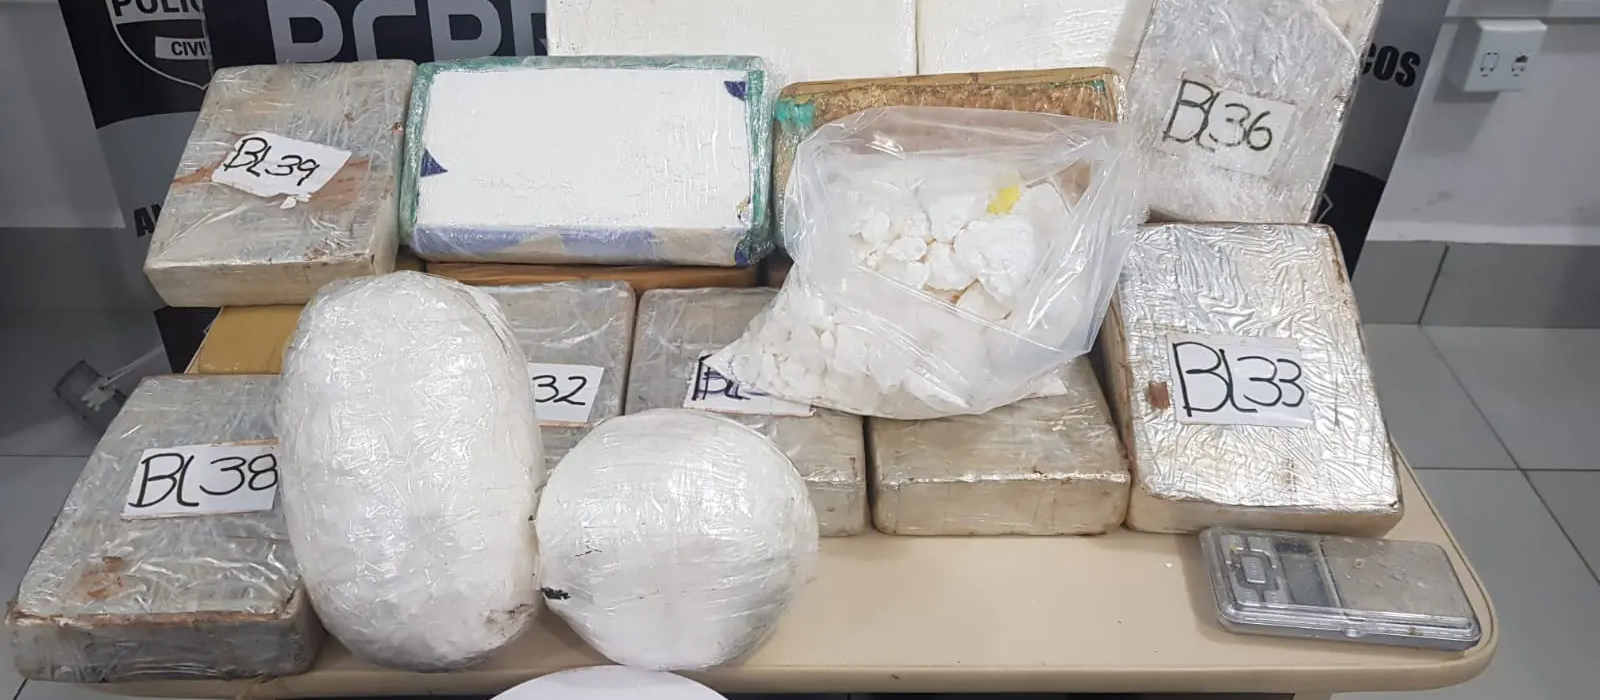 Polícia Civil de Maringá apreende quase 30 kg de drogas